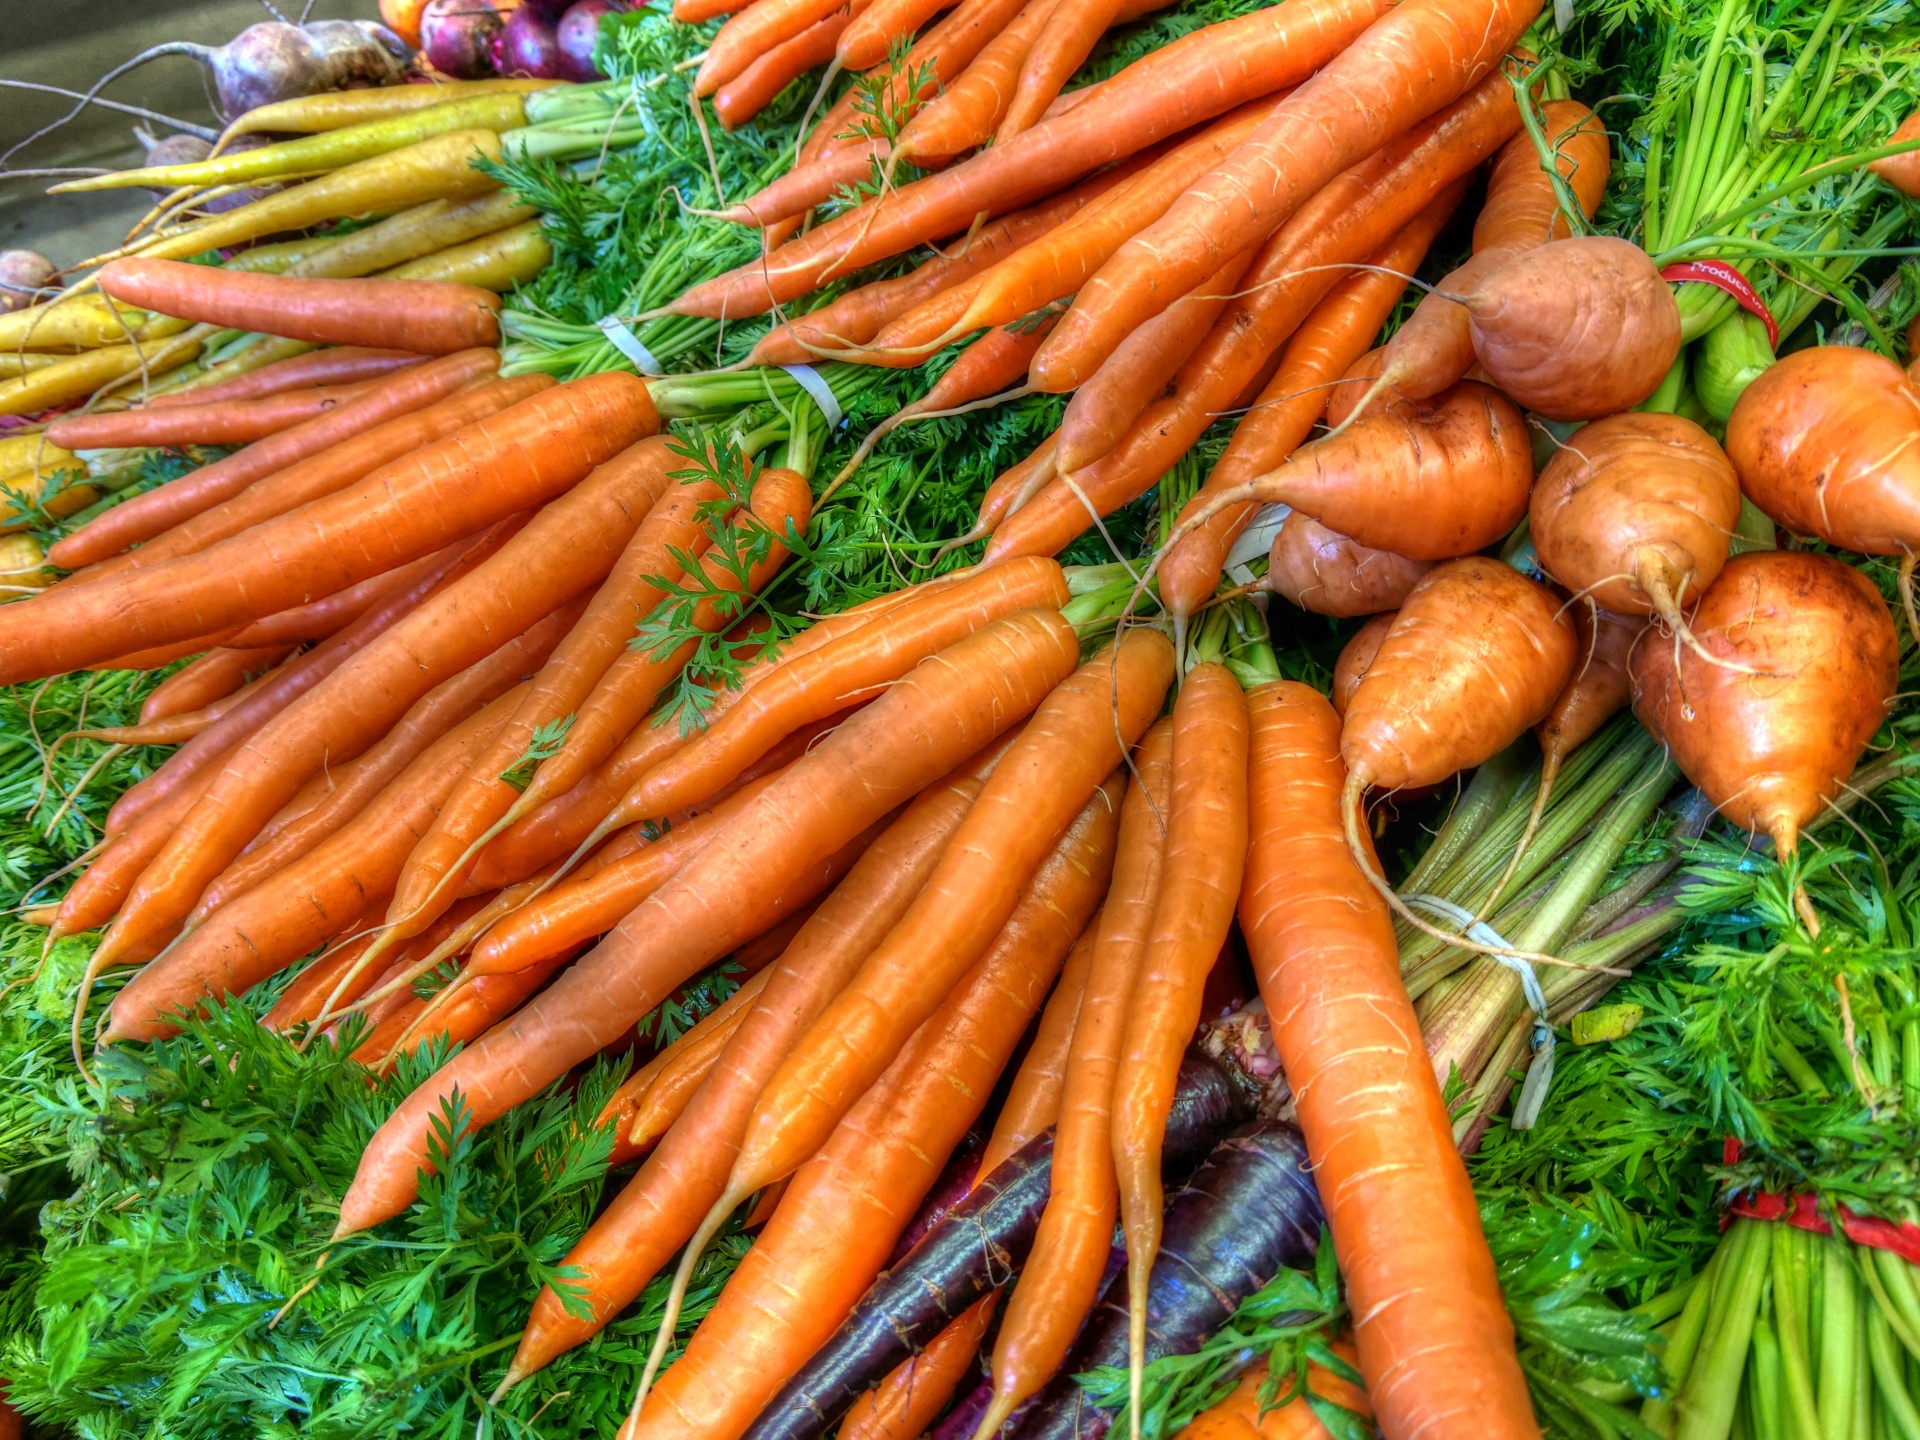 Download free photo of Carrot,wortels,vegetable,vegan,health - from needpix.com